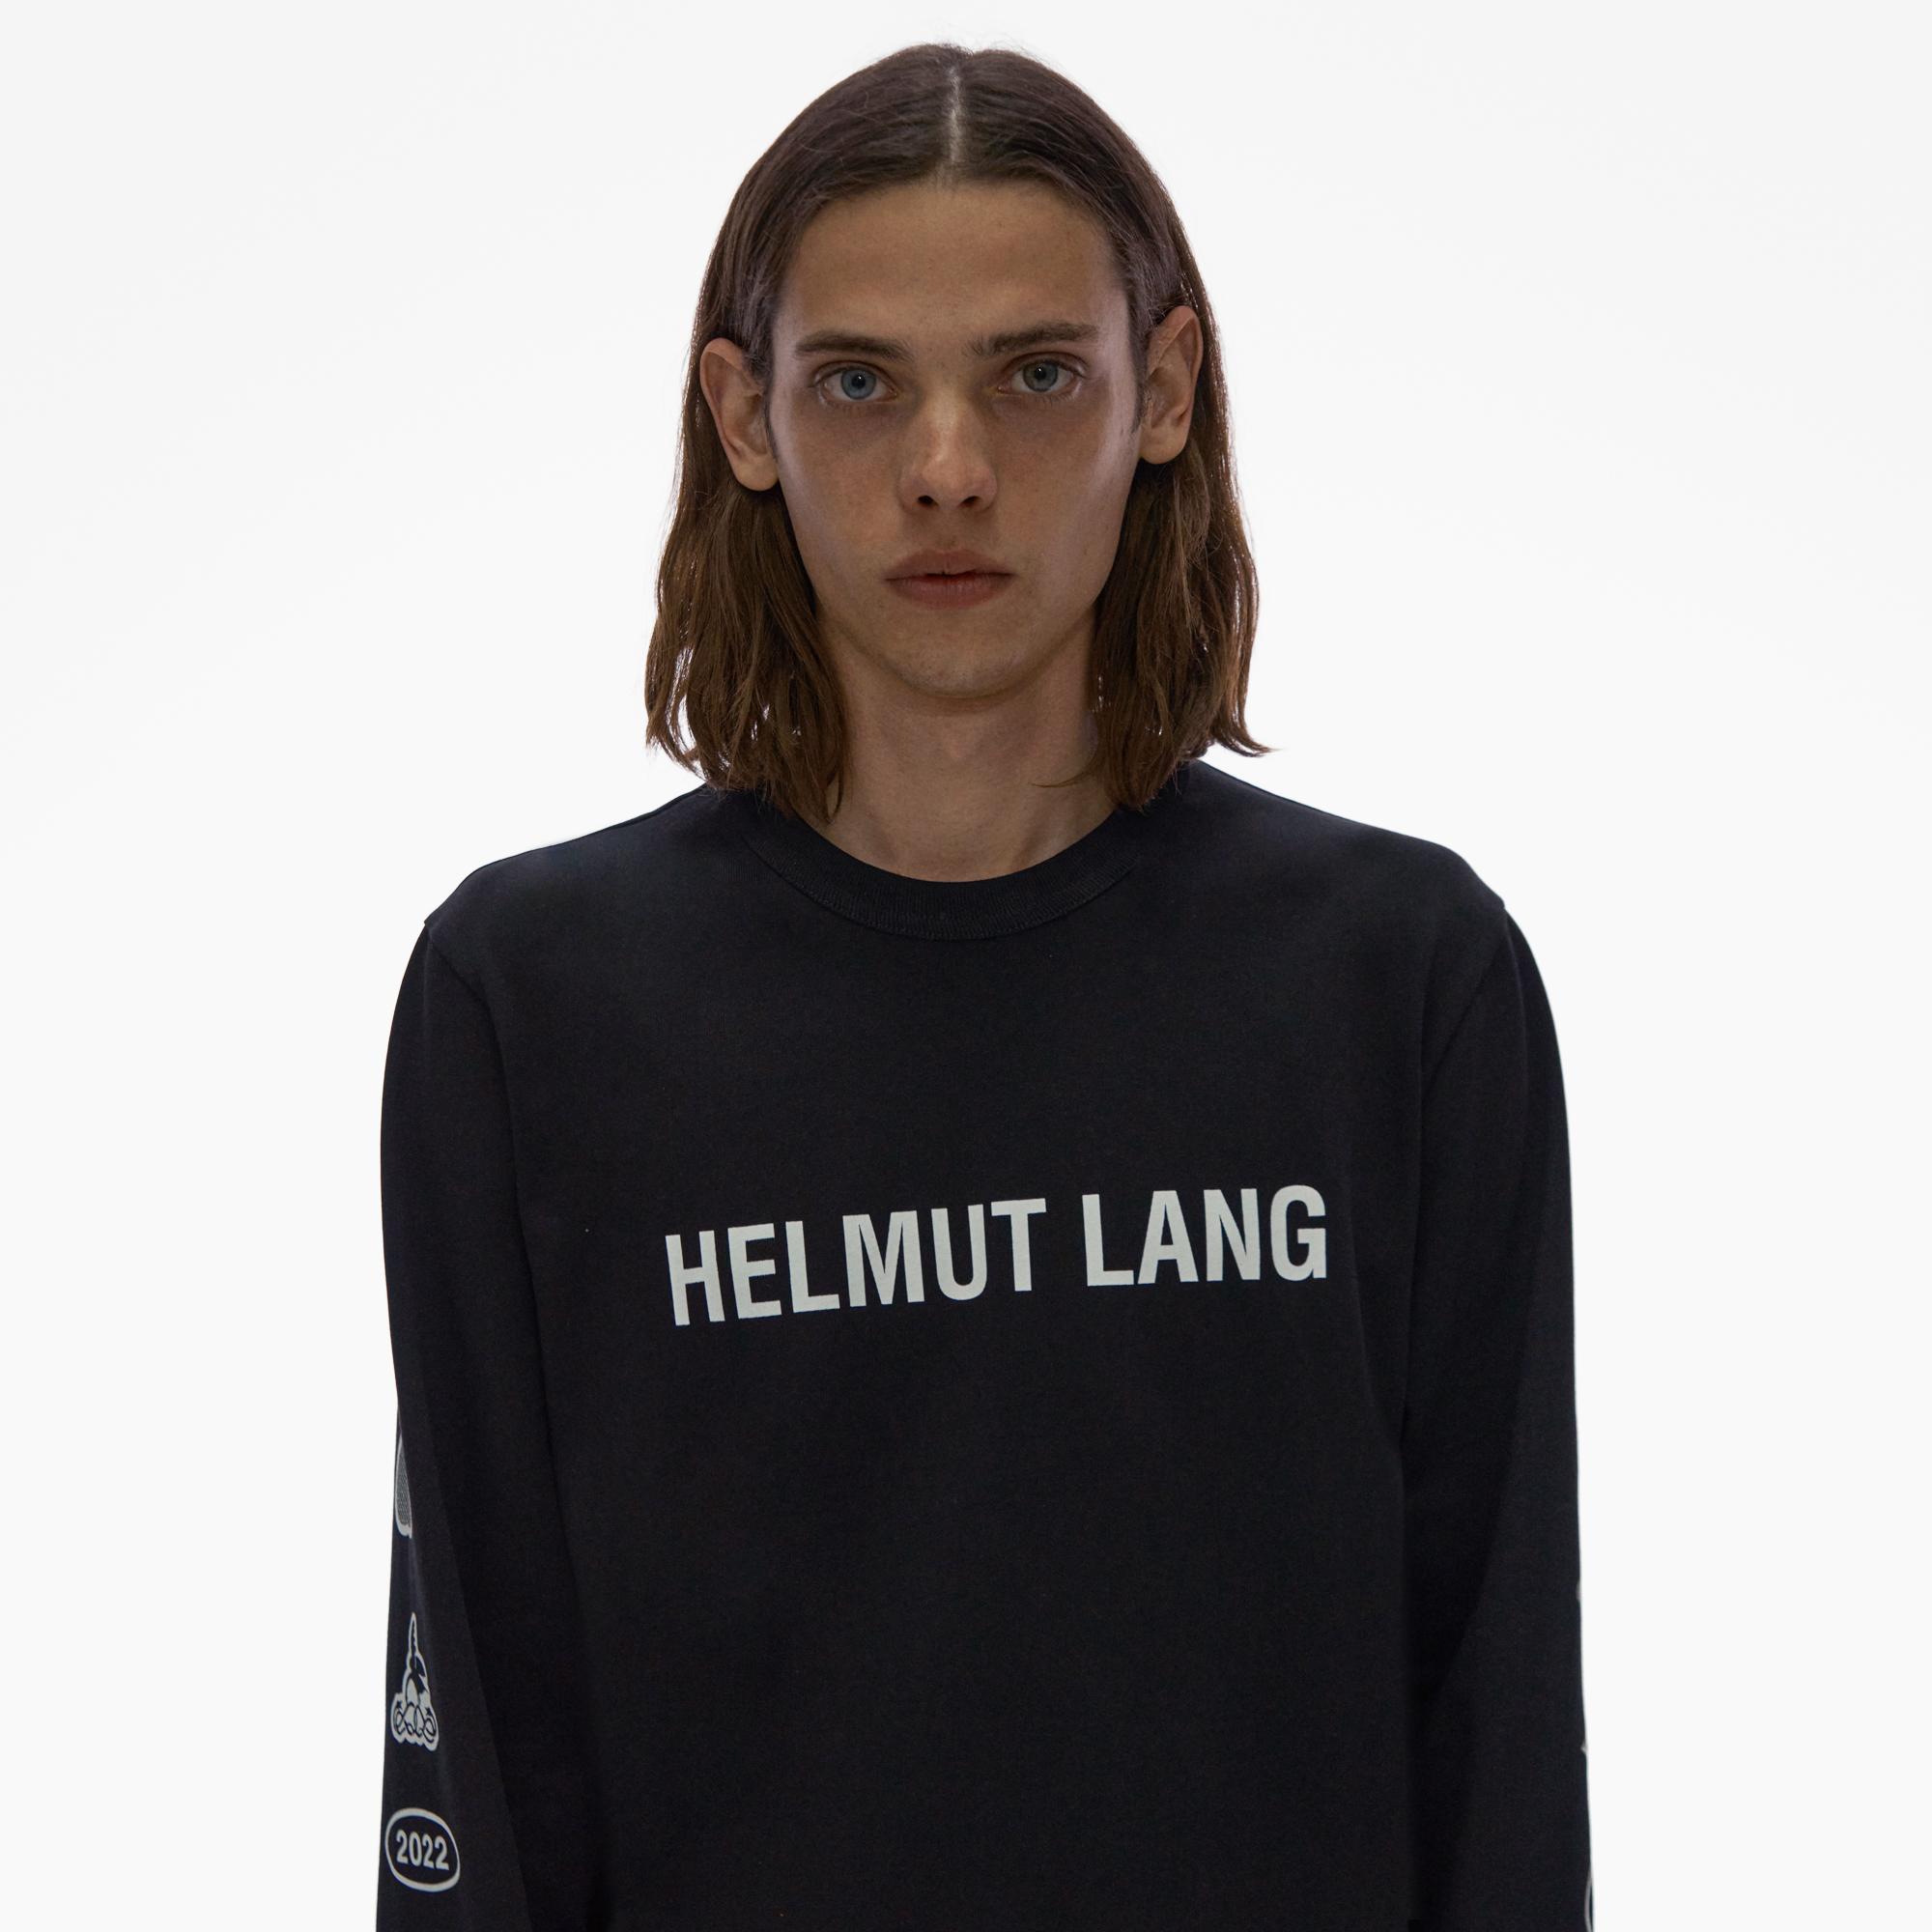 Helmut Lang Long-Sleeve Tee WWW.HELMUTLANG.COM